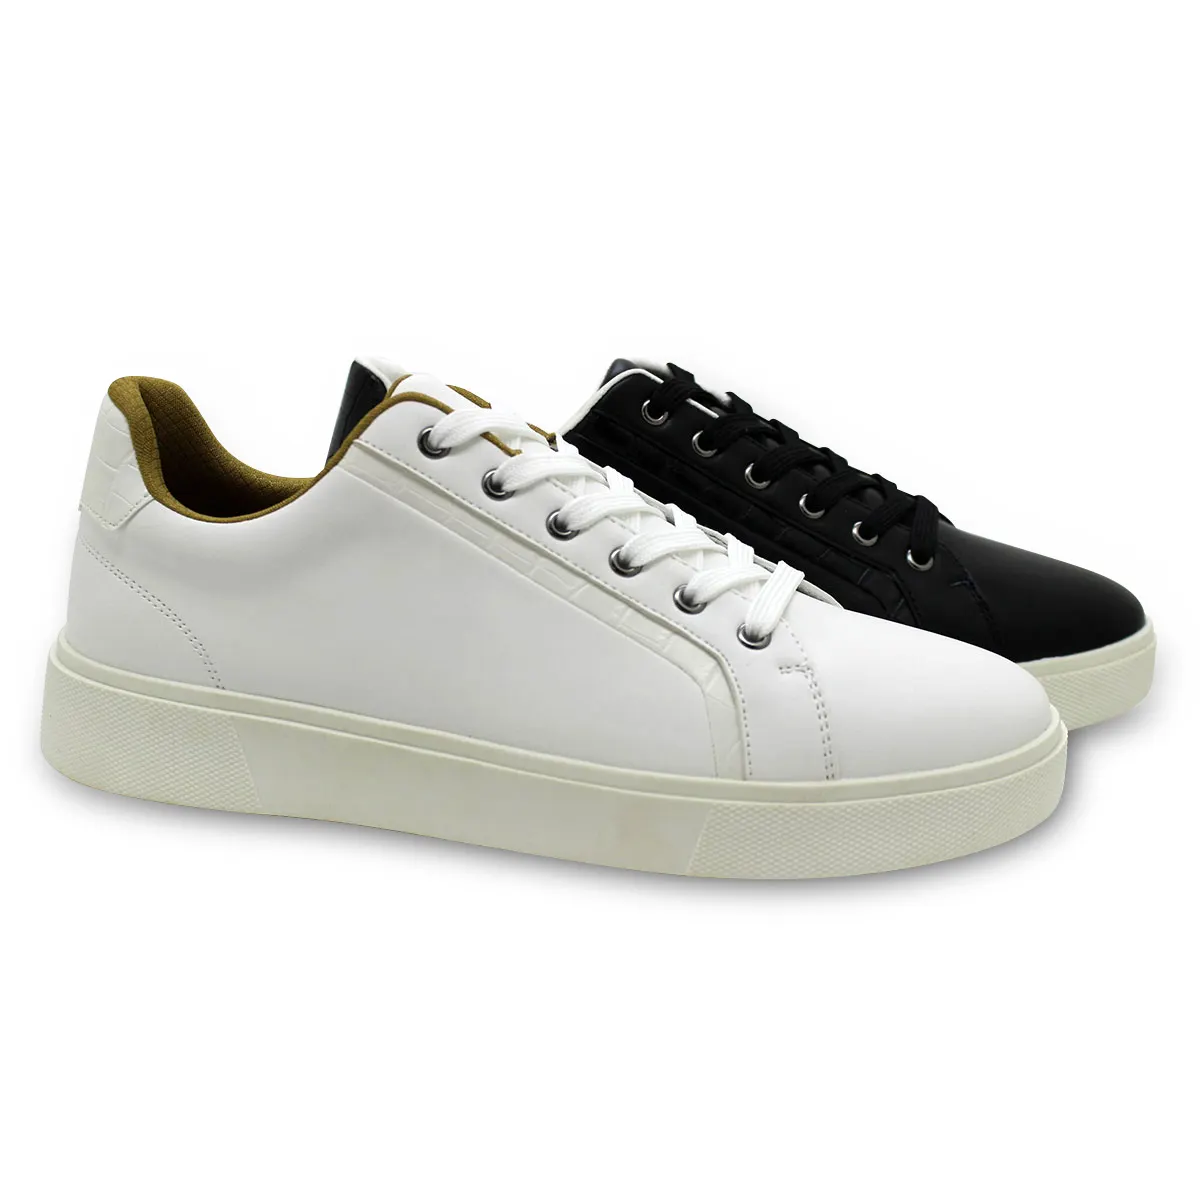 white walking fashion men's Flip casual shoes 2021 footwear for men